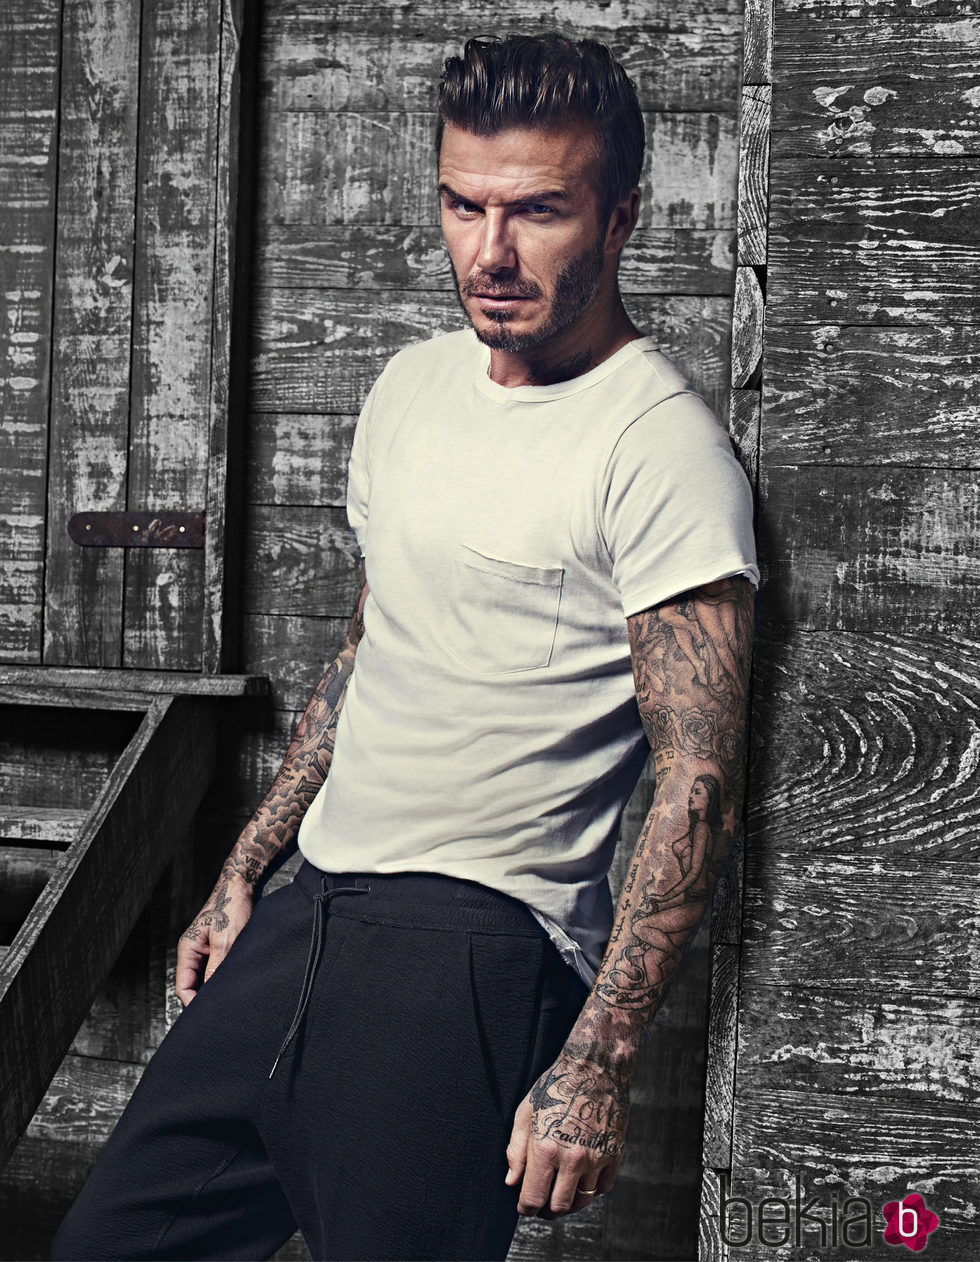 David Beckham con camiseta blanca de la colección 'David Beckham Bodywear'